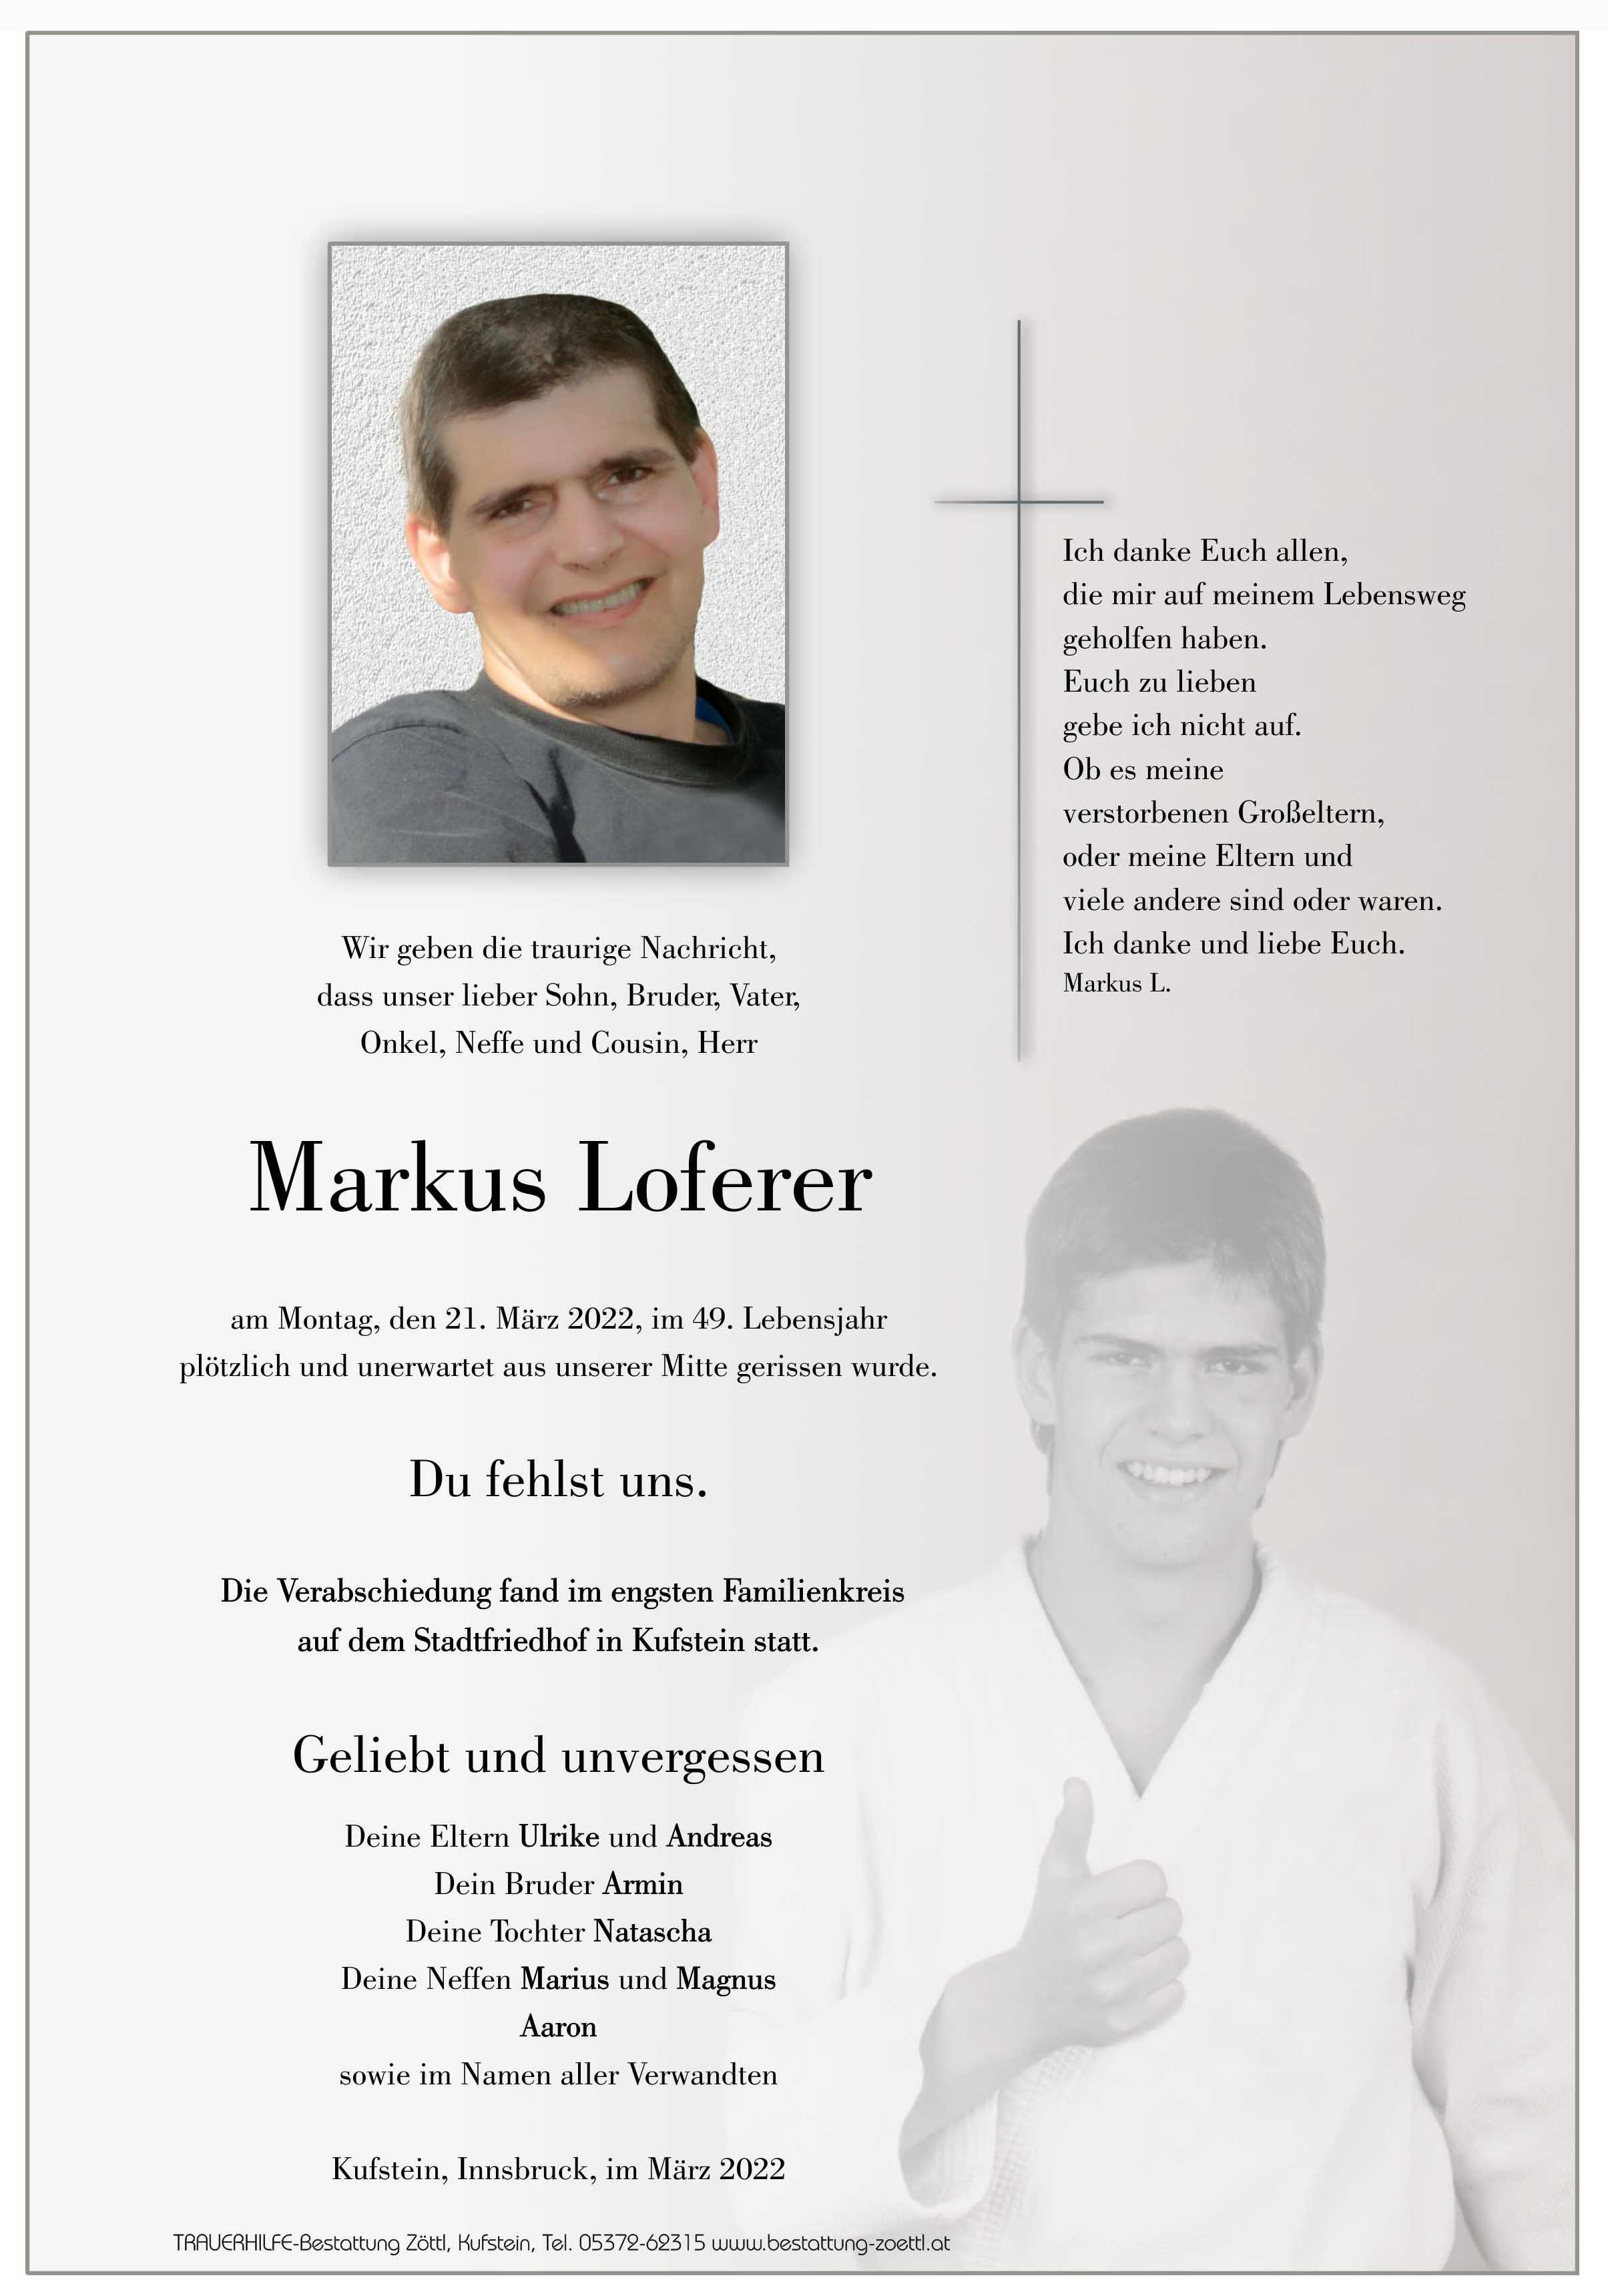 Markus Loferer